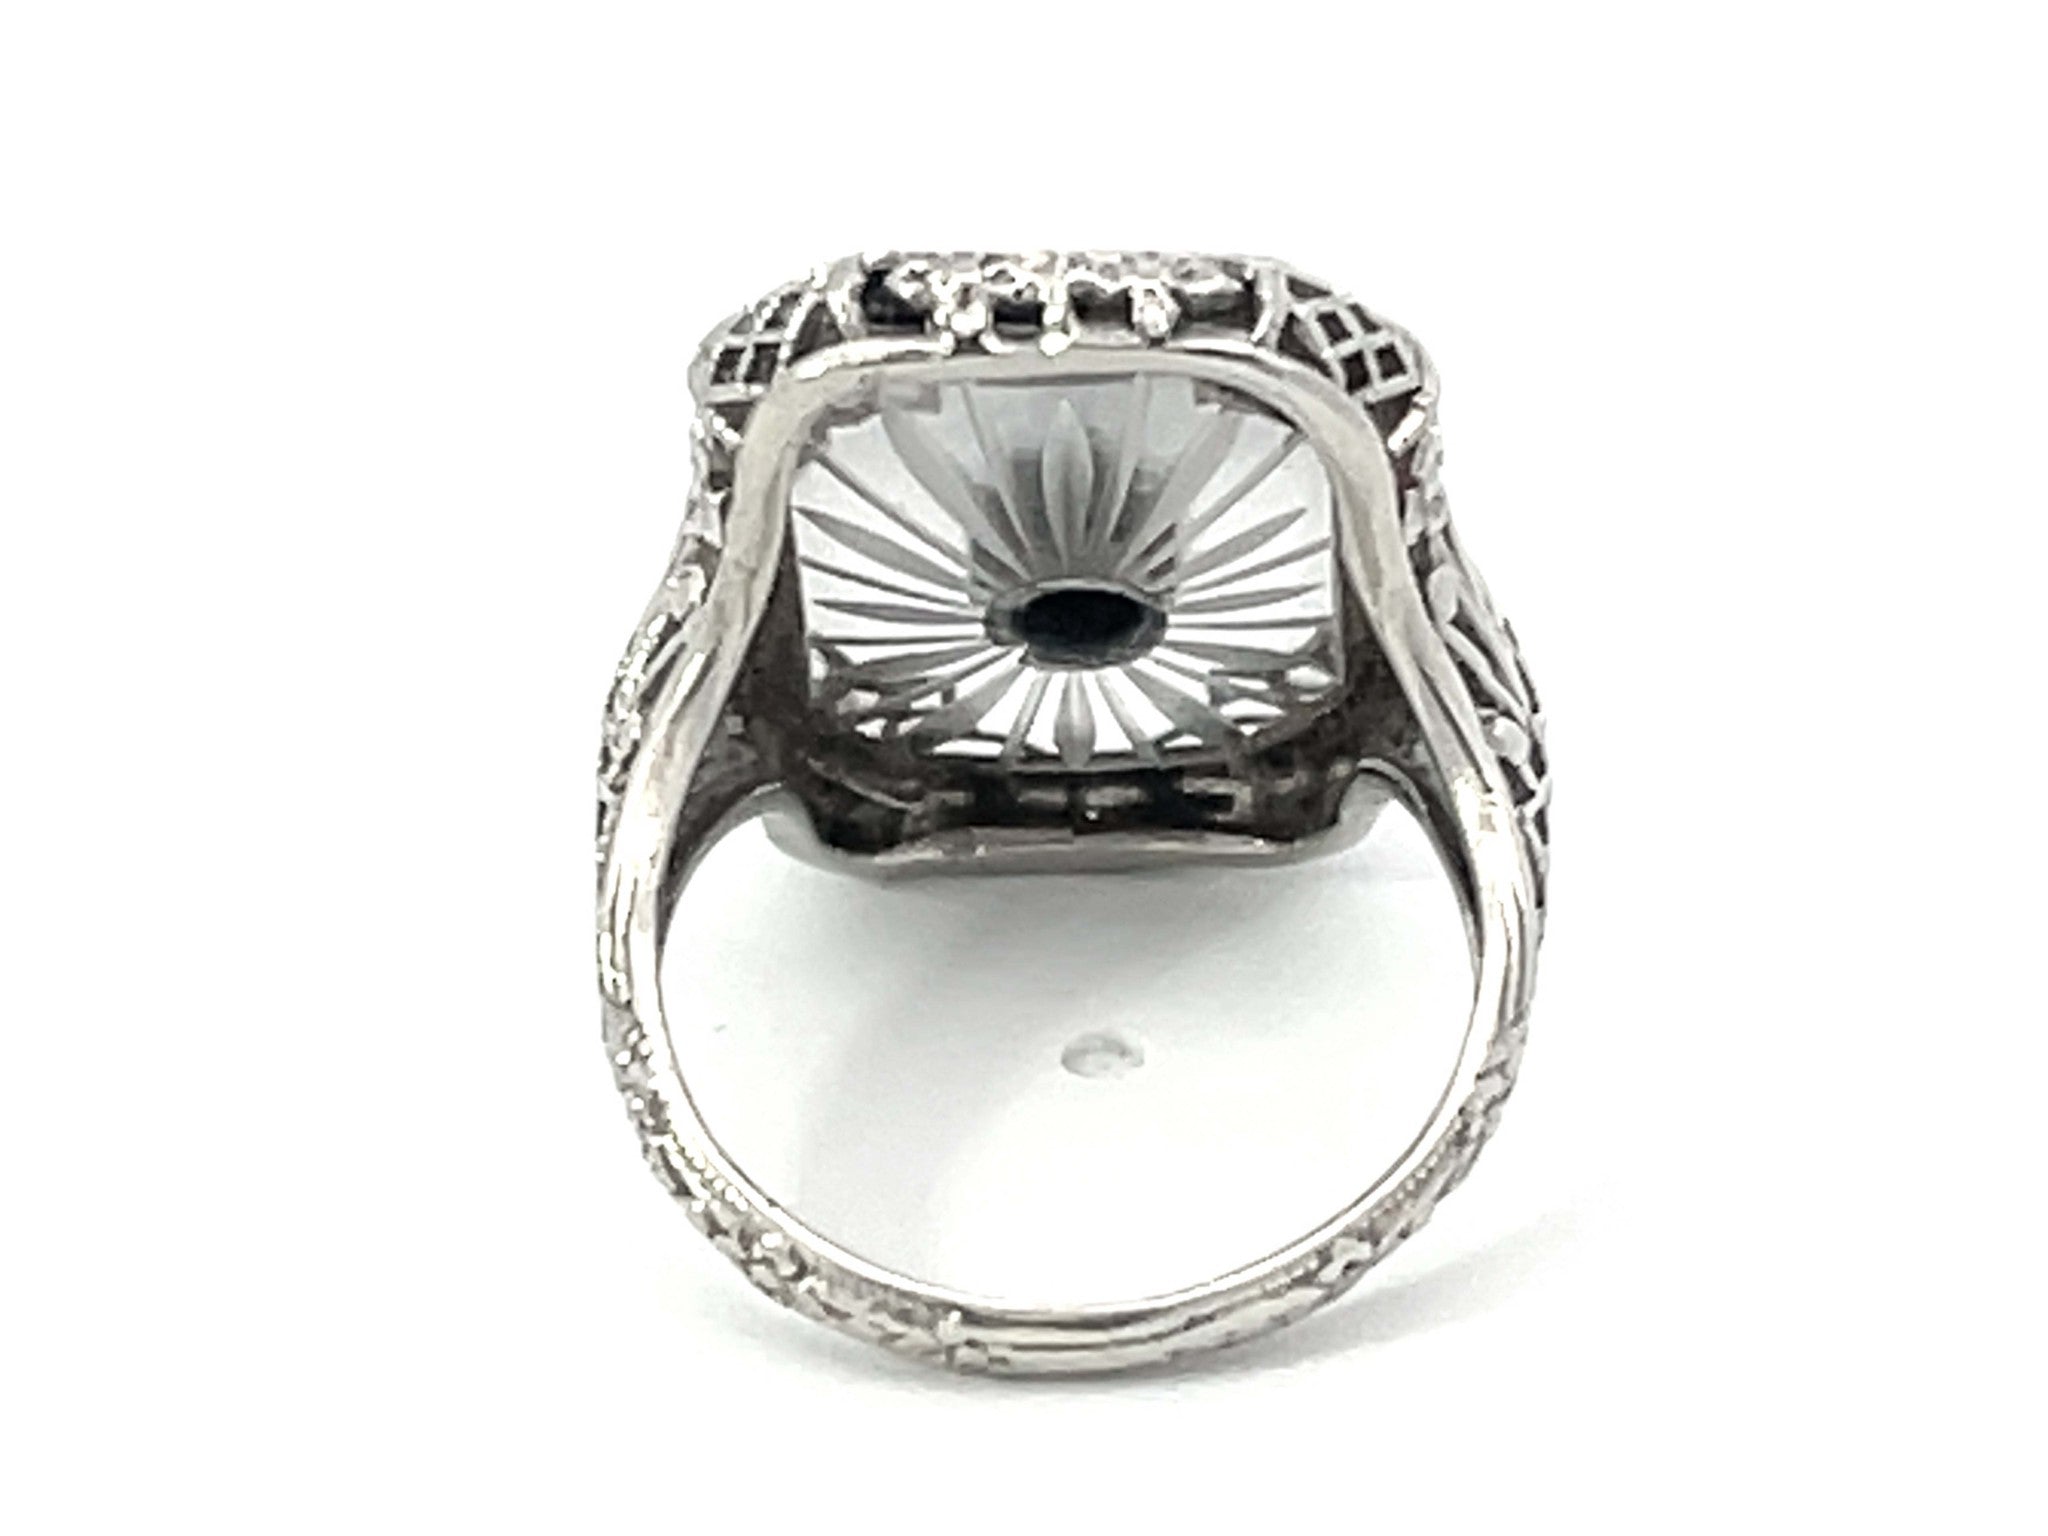 Art Deco Filigree Carved Rock Crystal Diamond Ring in 14k White Gold